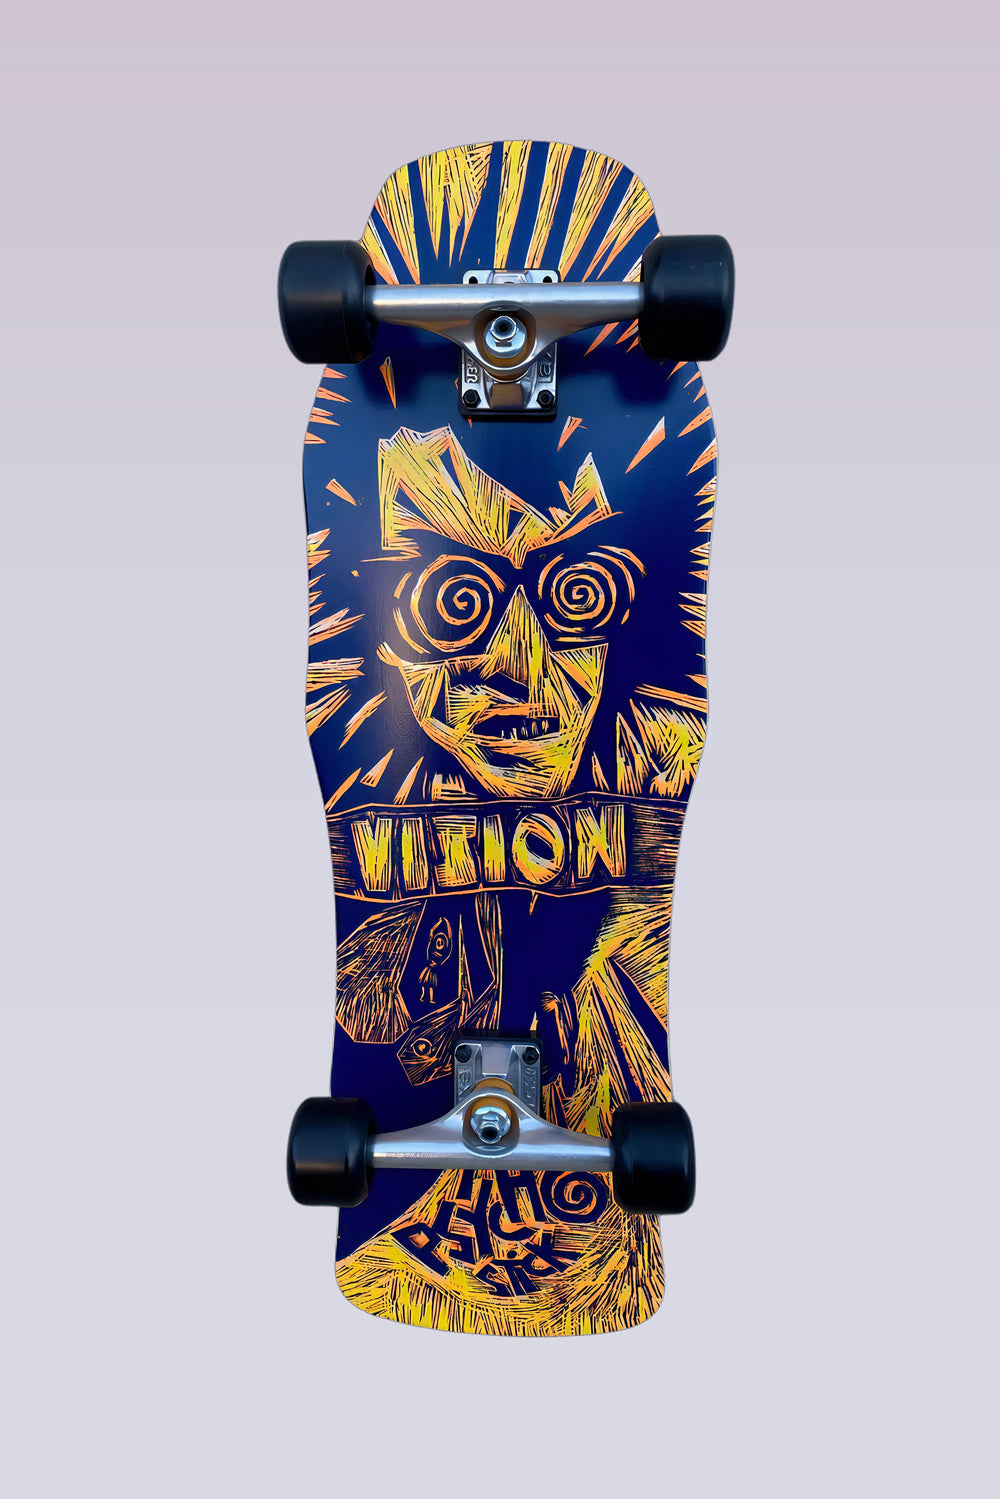 Original Psycho Stick Complete Skateboard - Woodcut Art by Sean Starwars - 10"x30" - Blue/Yellow